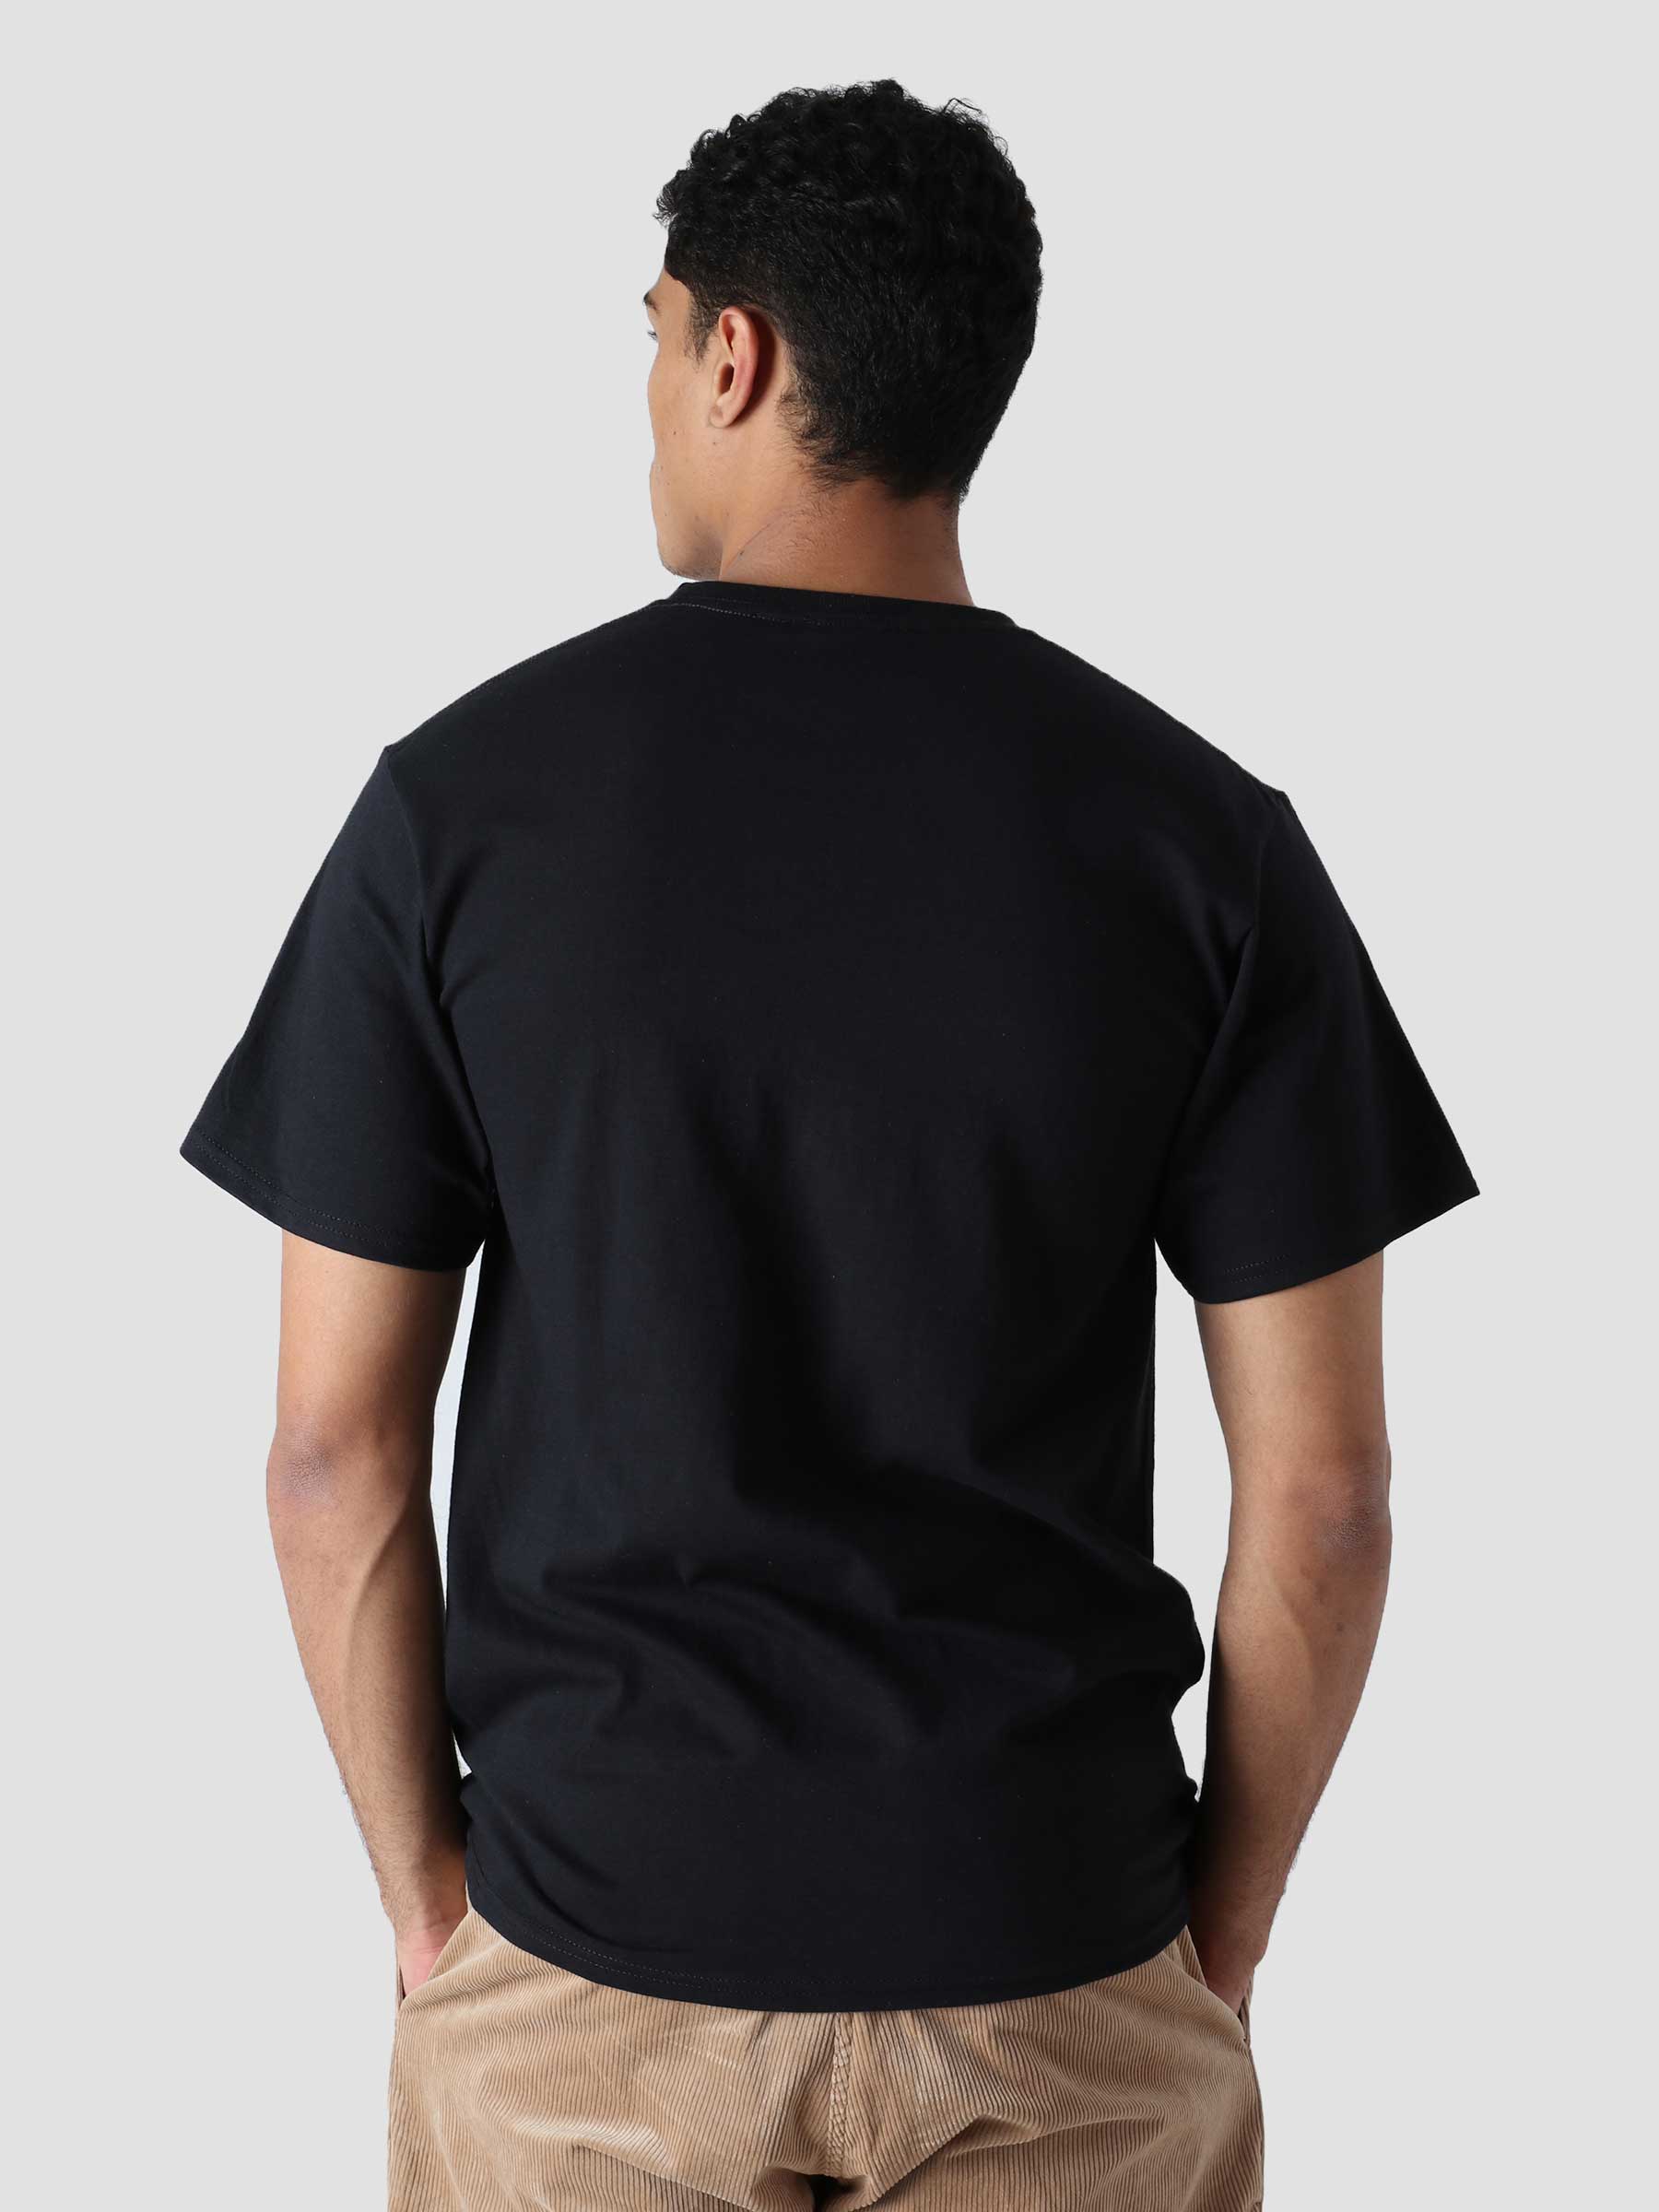 Vvs S/S T-Shirt Black TS01575